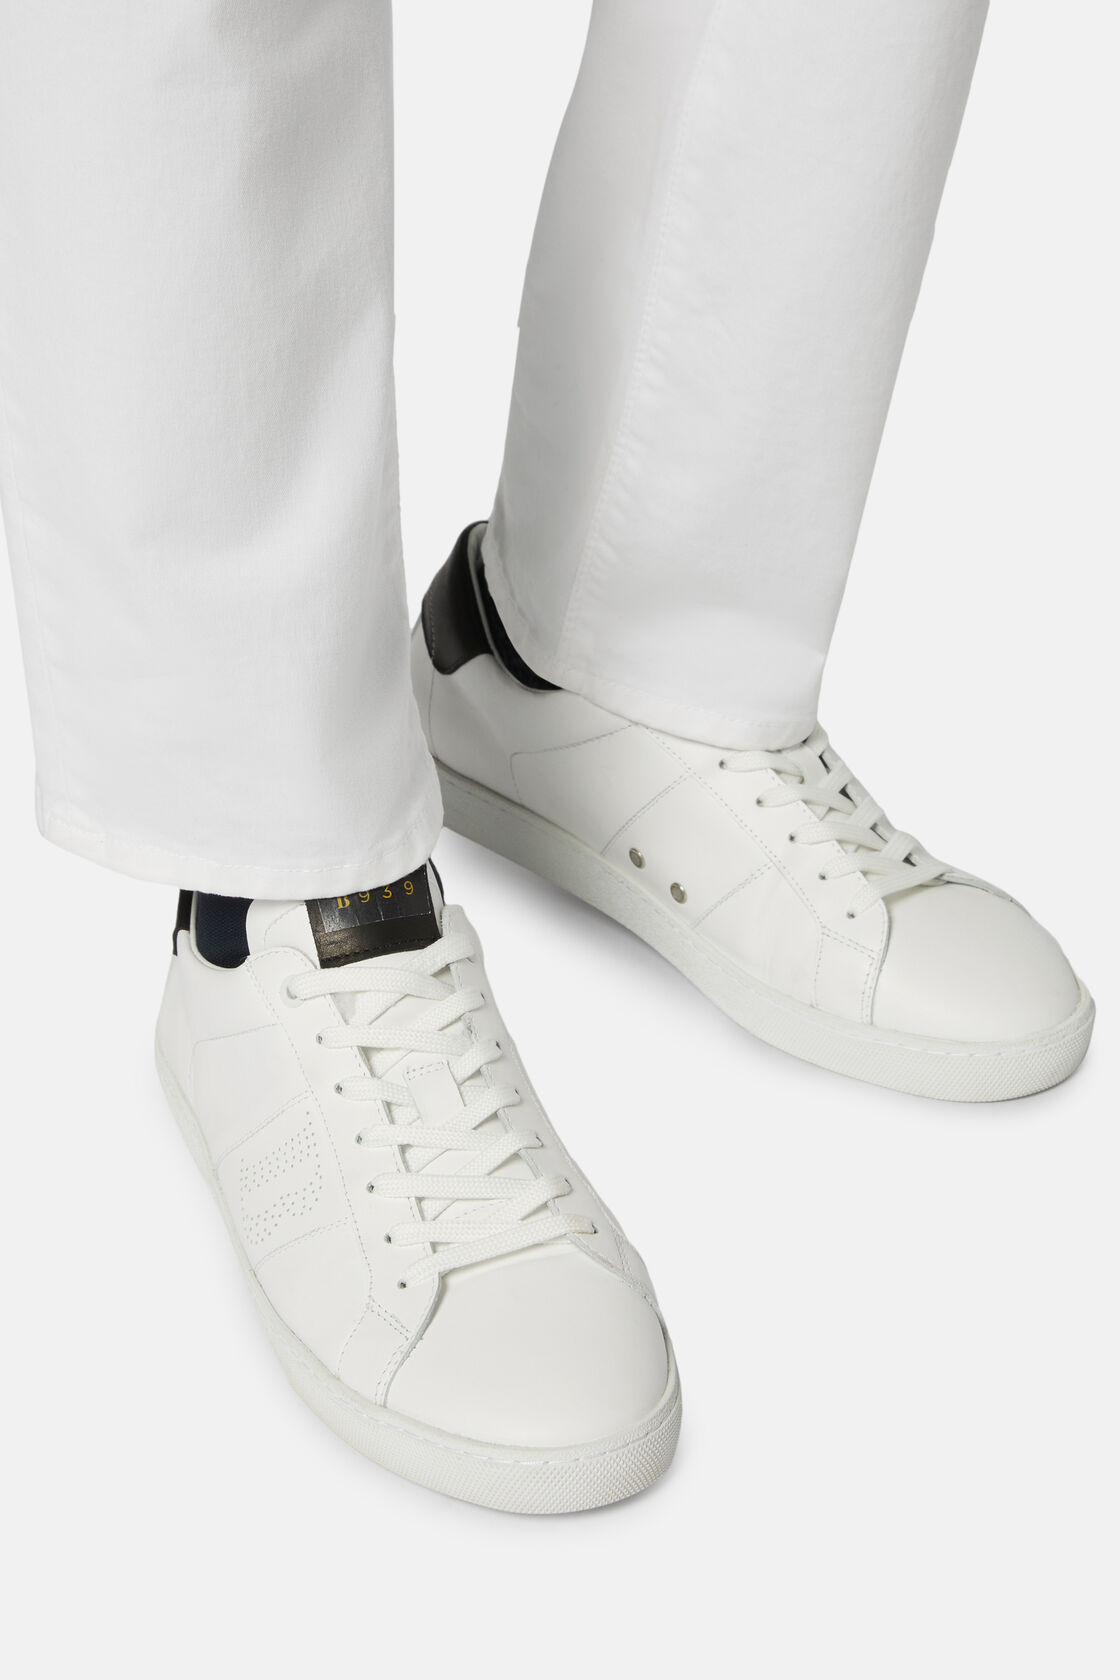 Schwarz-Weiße Ledersneaker, , hi-res